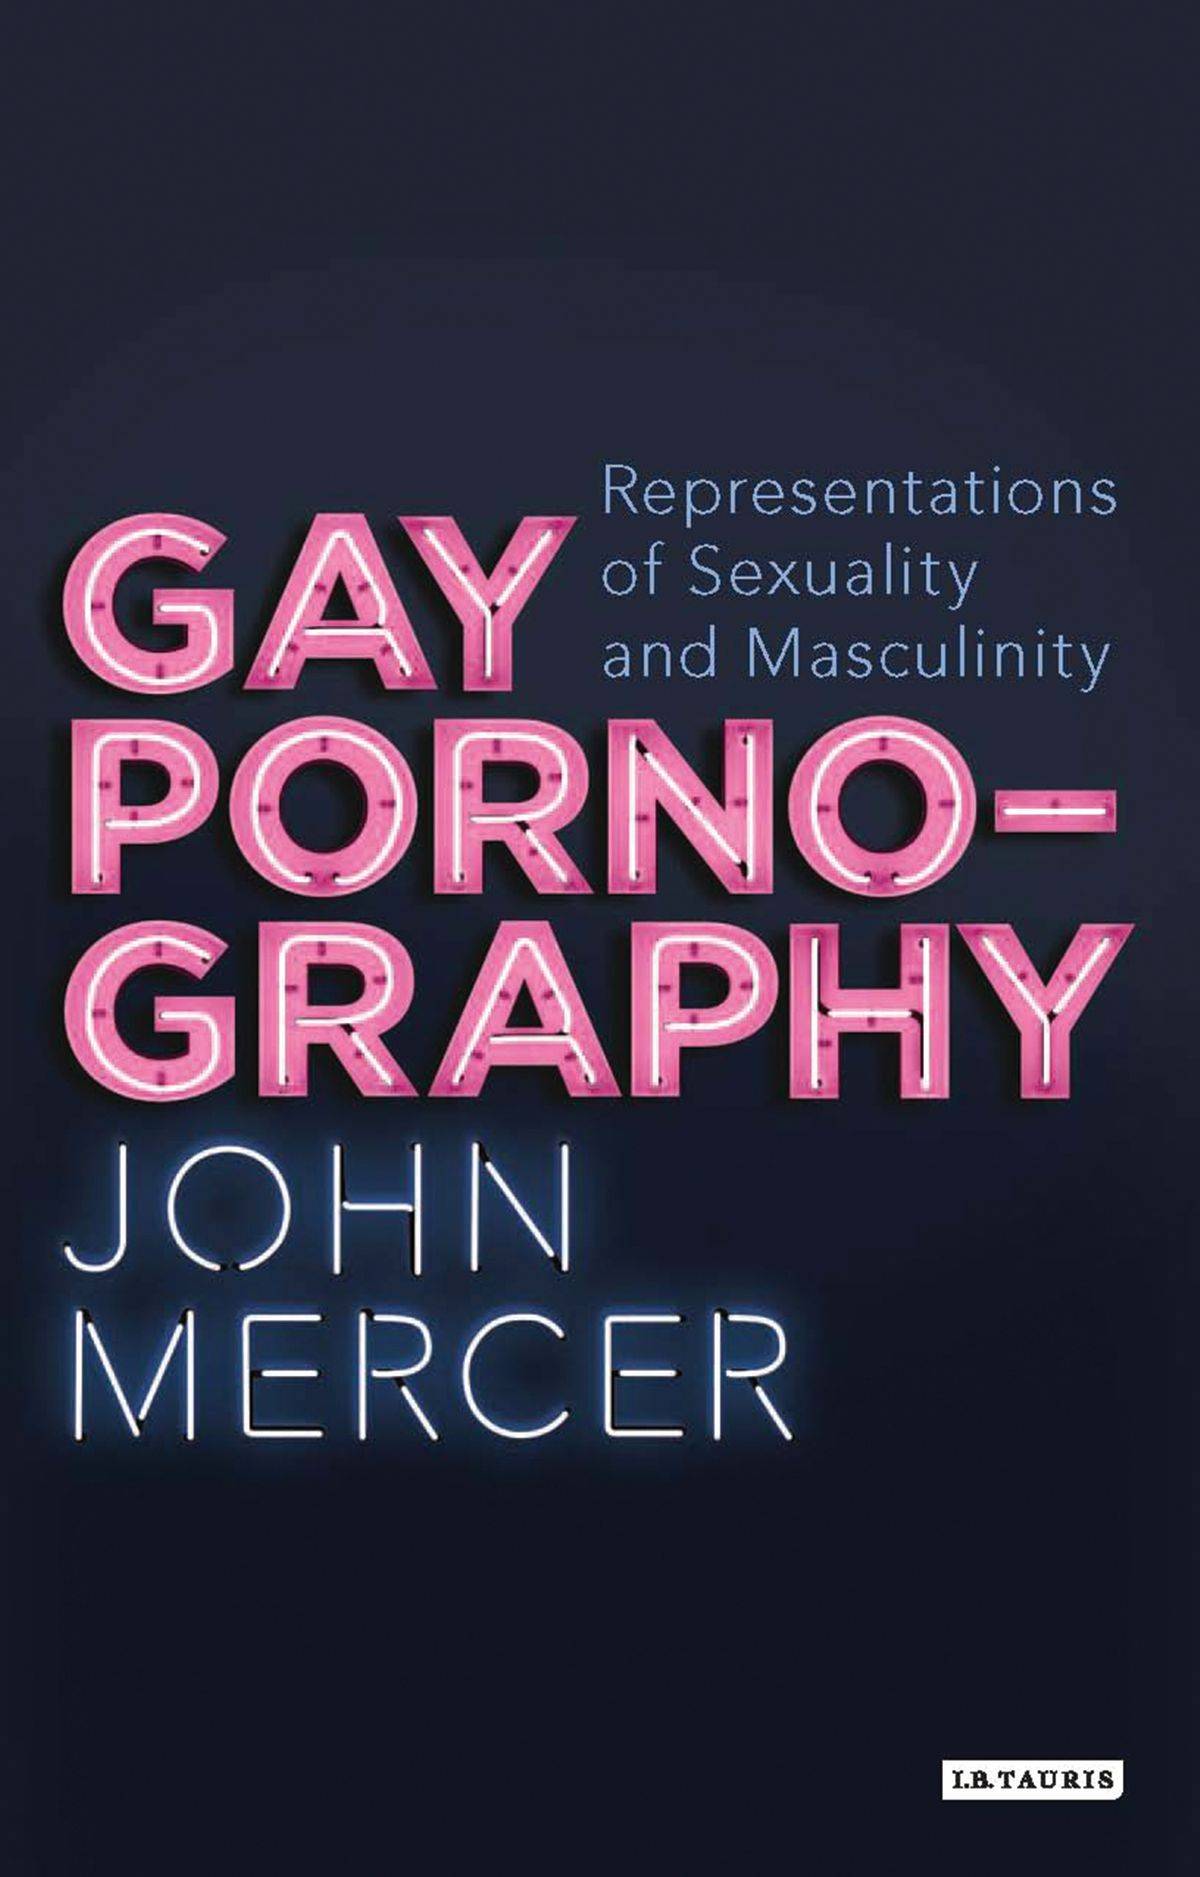 Grenade reccomend profession desire lesbian study desire in gay literature staging